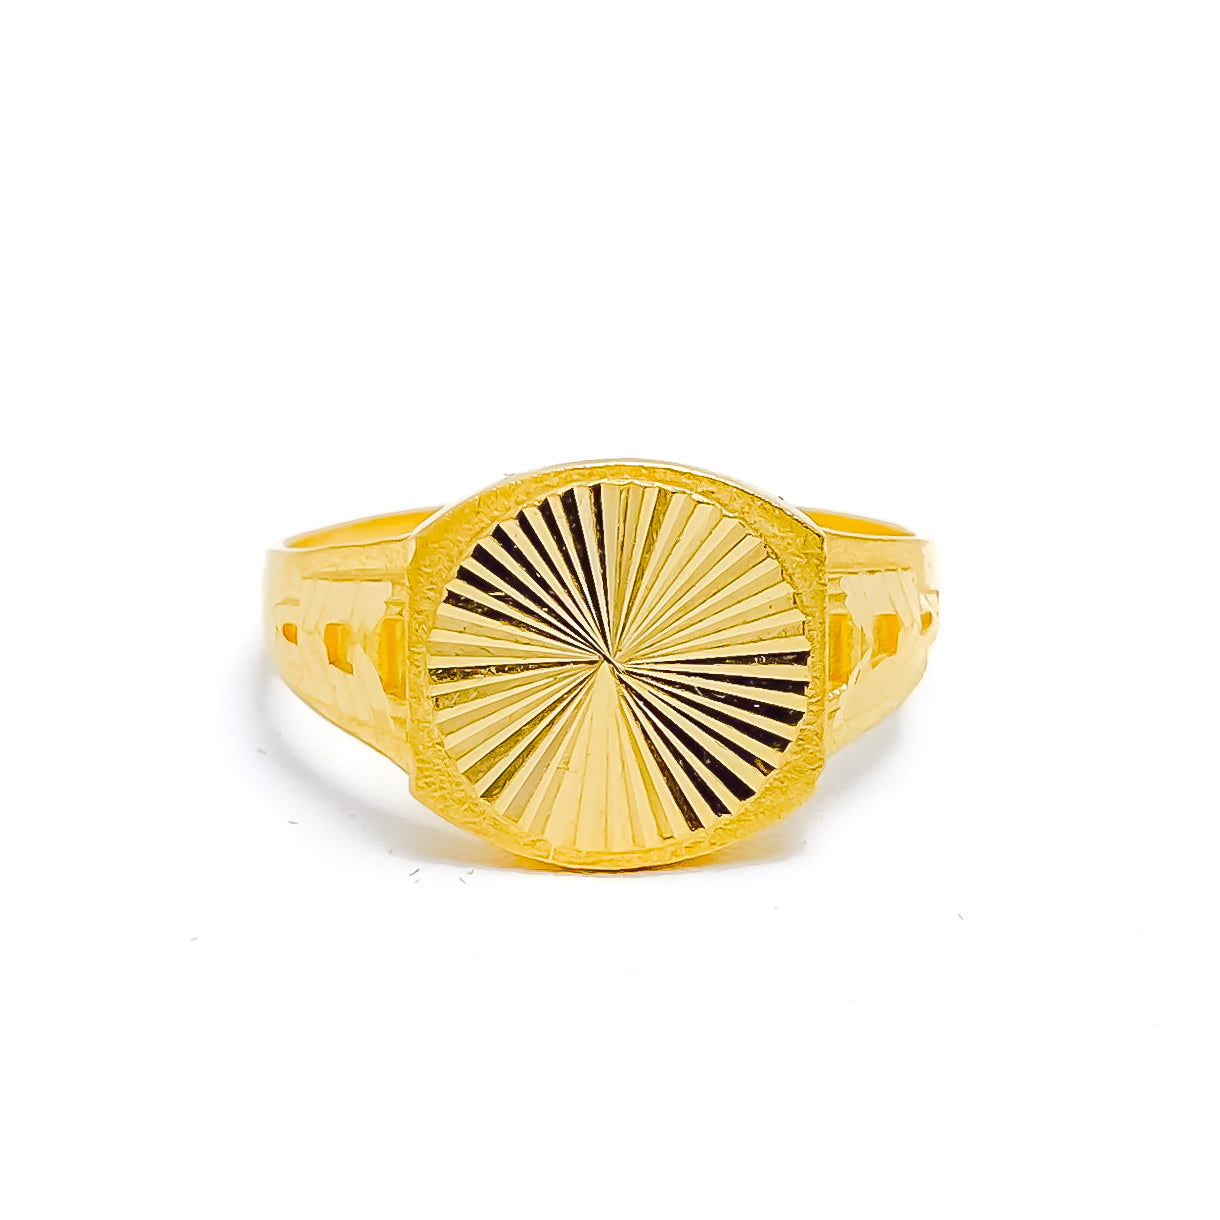 10K Yellow Gold 8mm Half Round Wedding Band Ring Size 5